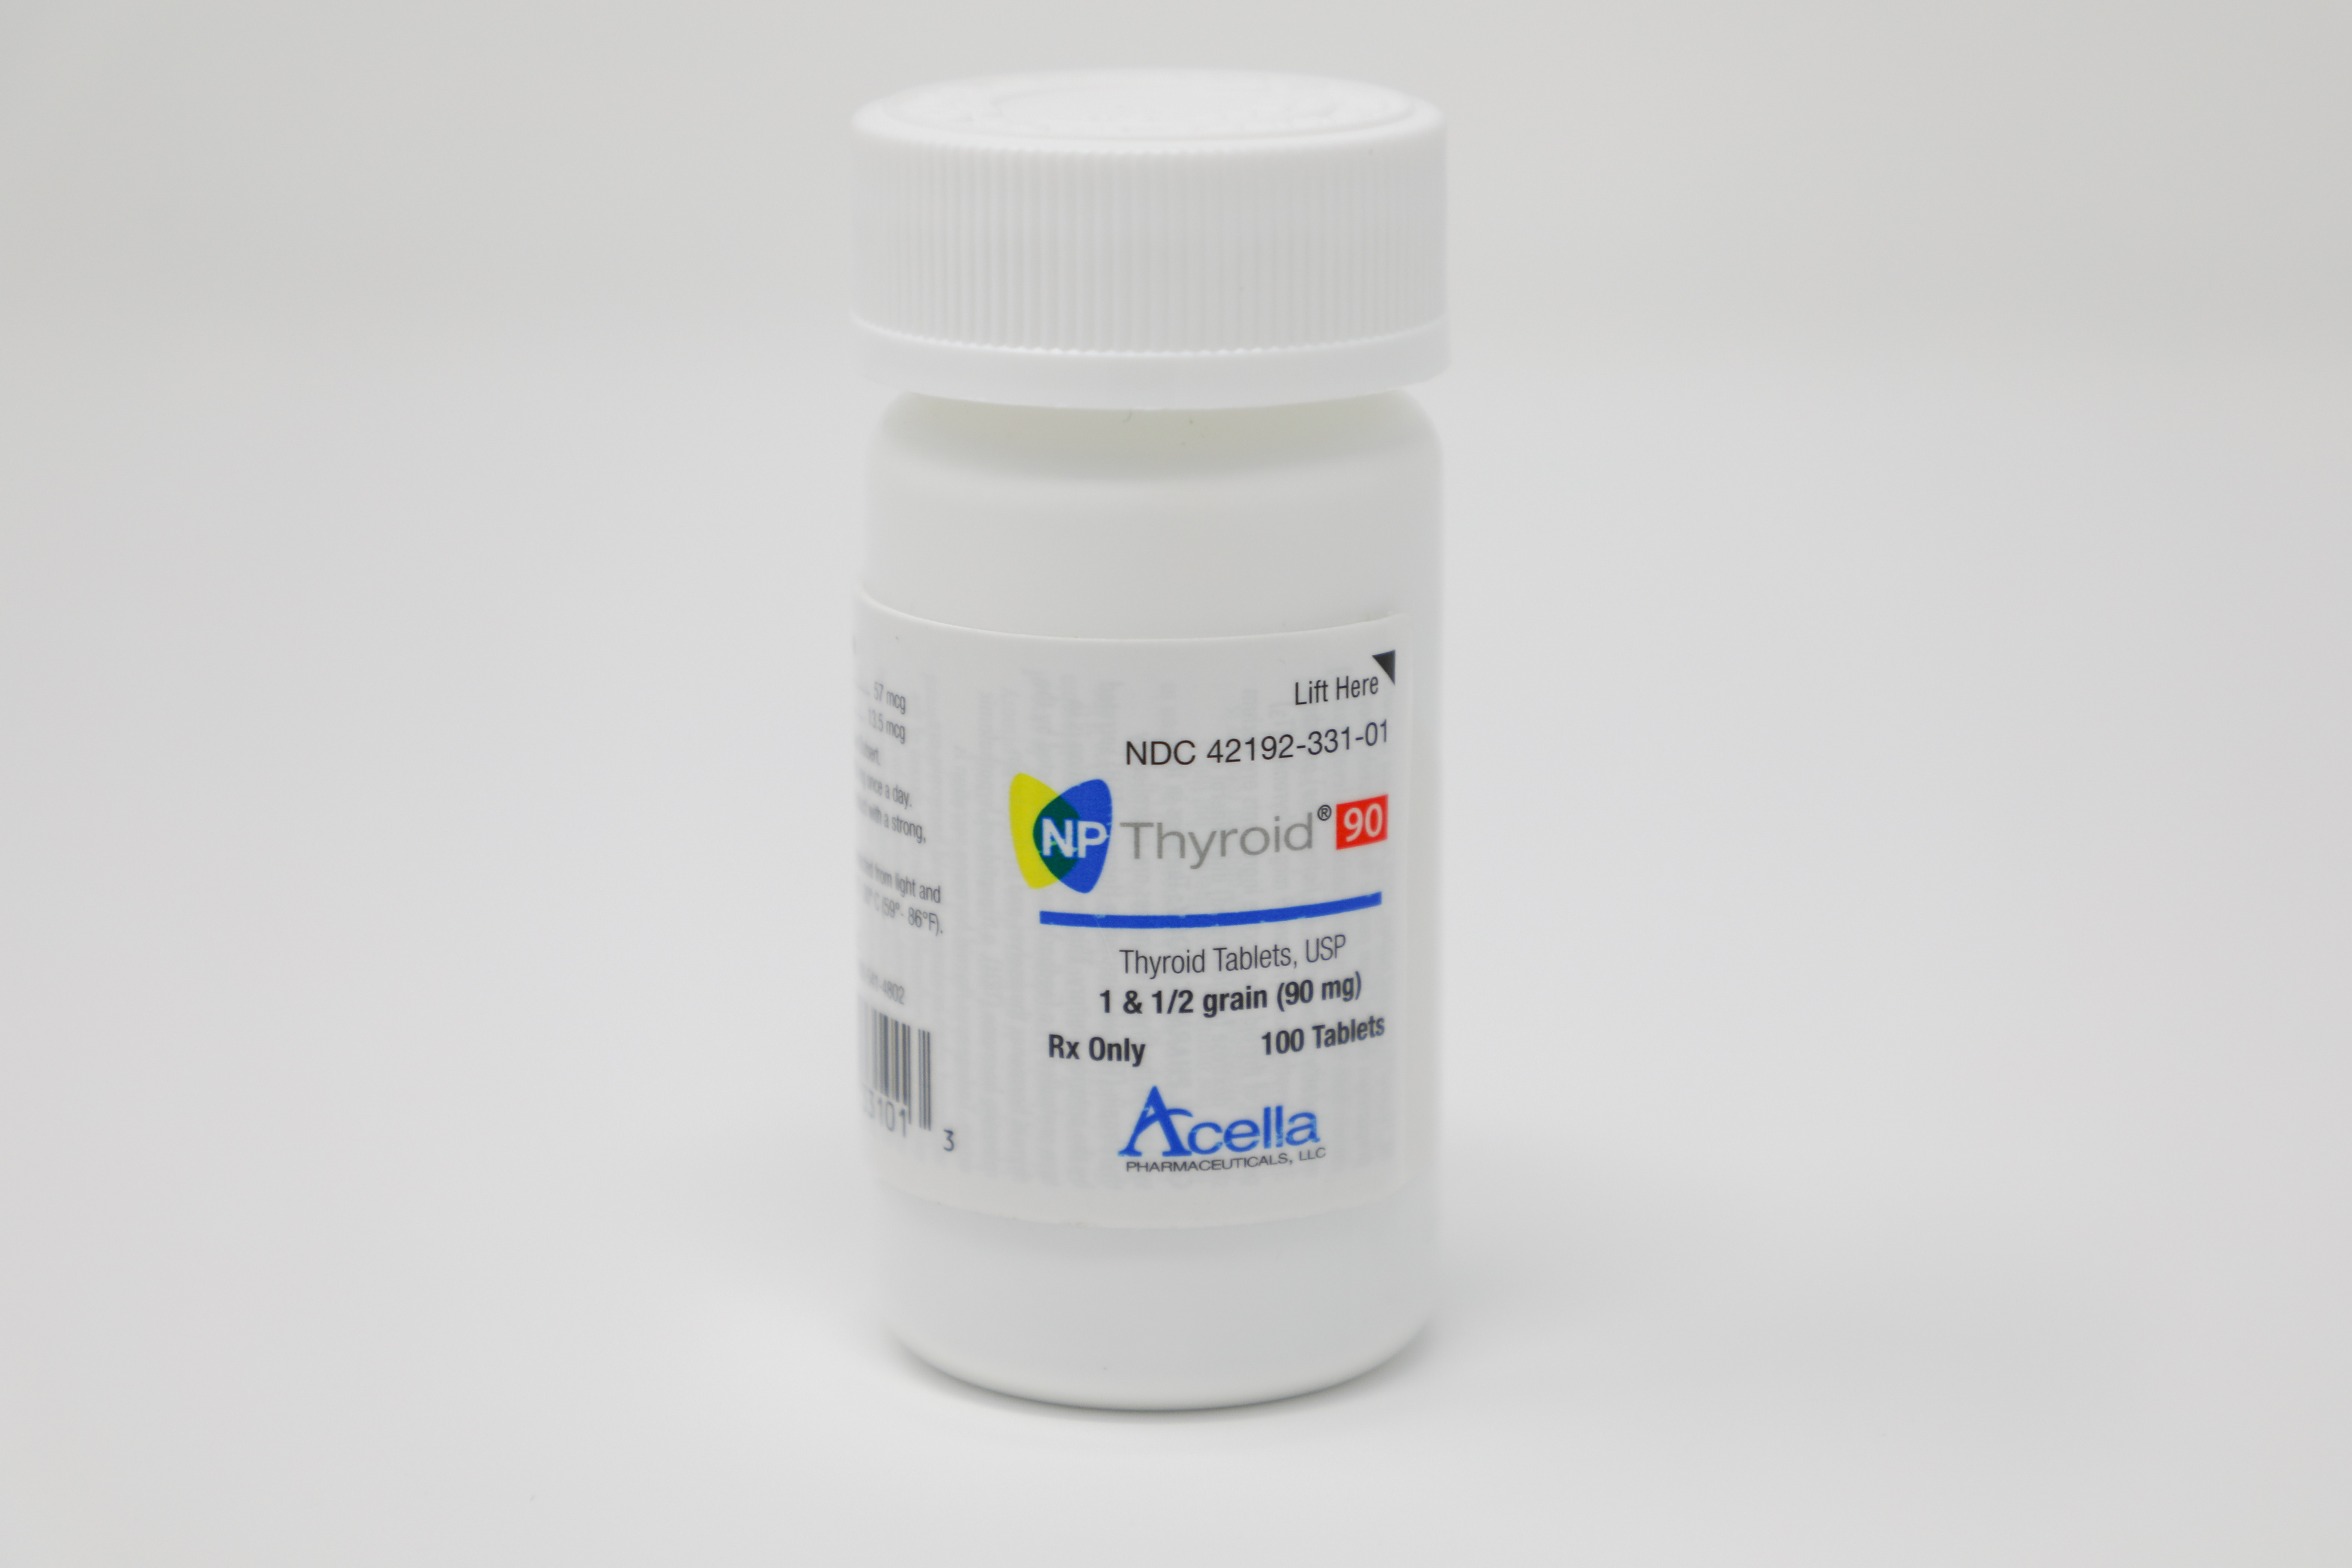 NP Thyroid® (Thyroid Tablets, USP) 90 mg tablets